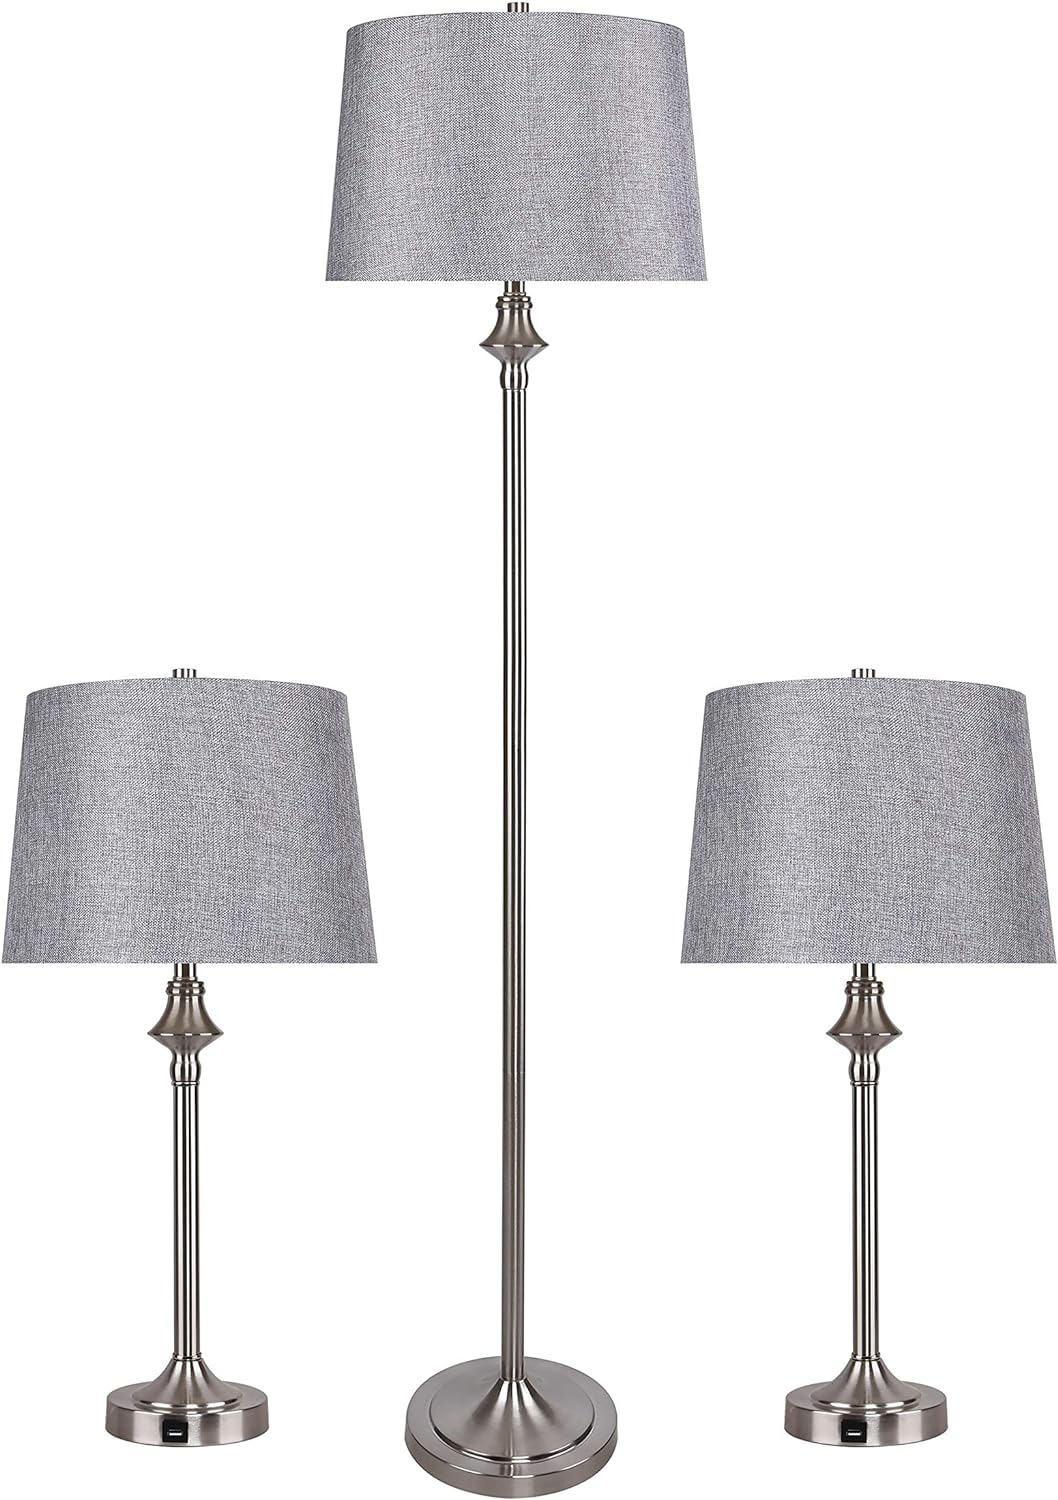 Two 28 5 Brushed Nickel Table Lamps, Grandview Gallery Floor Lamps